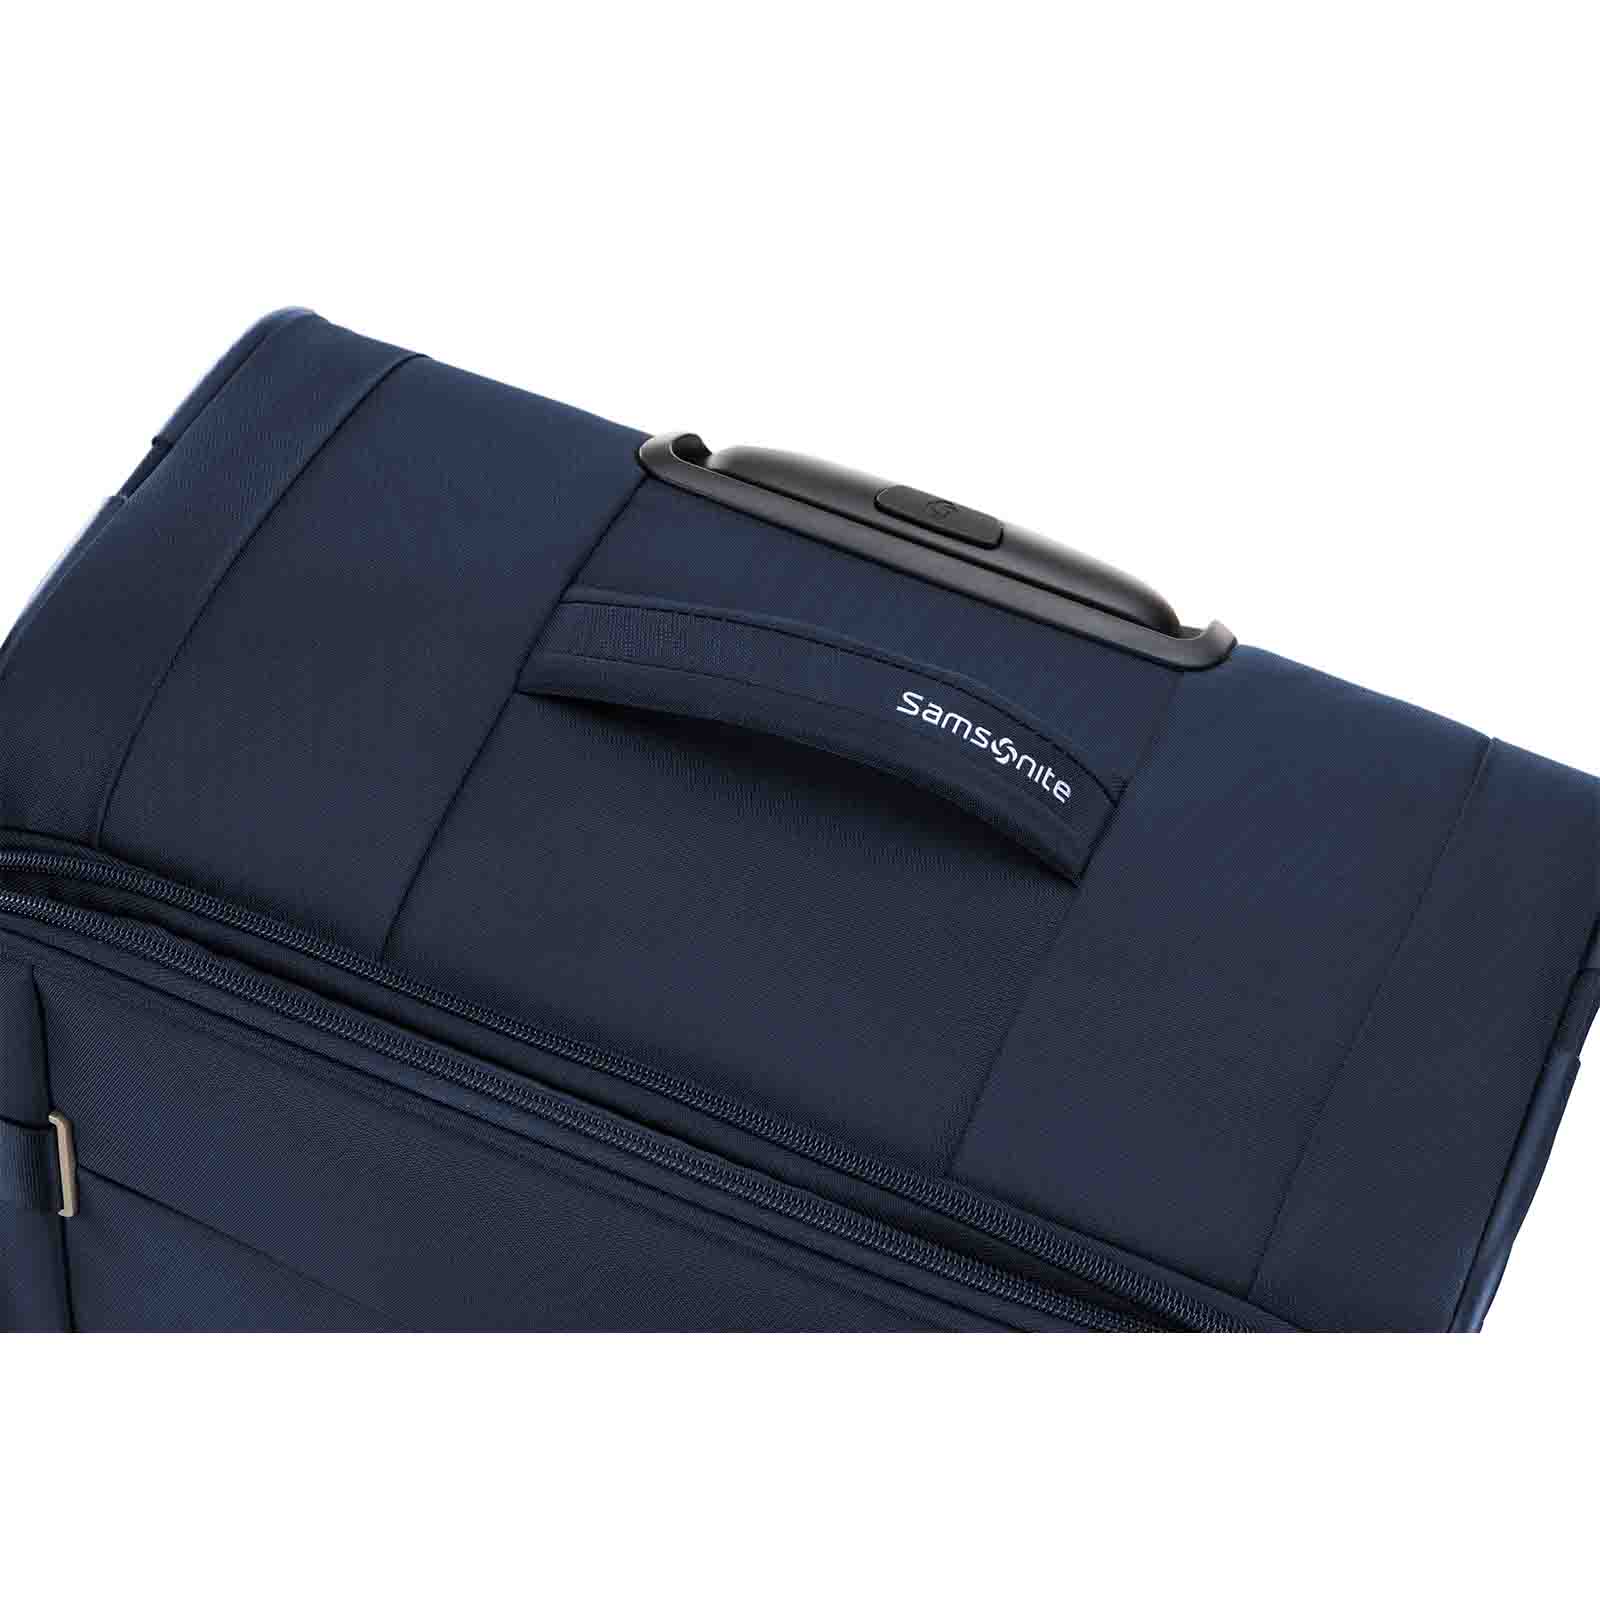 Samsonite-City-Rhythm-71cm-Suitcase-Navy-Handle